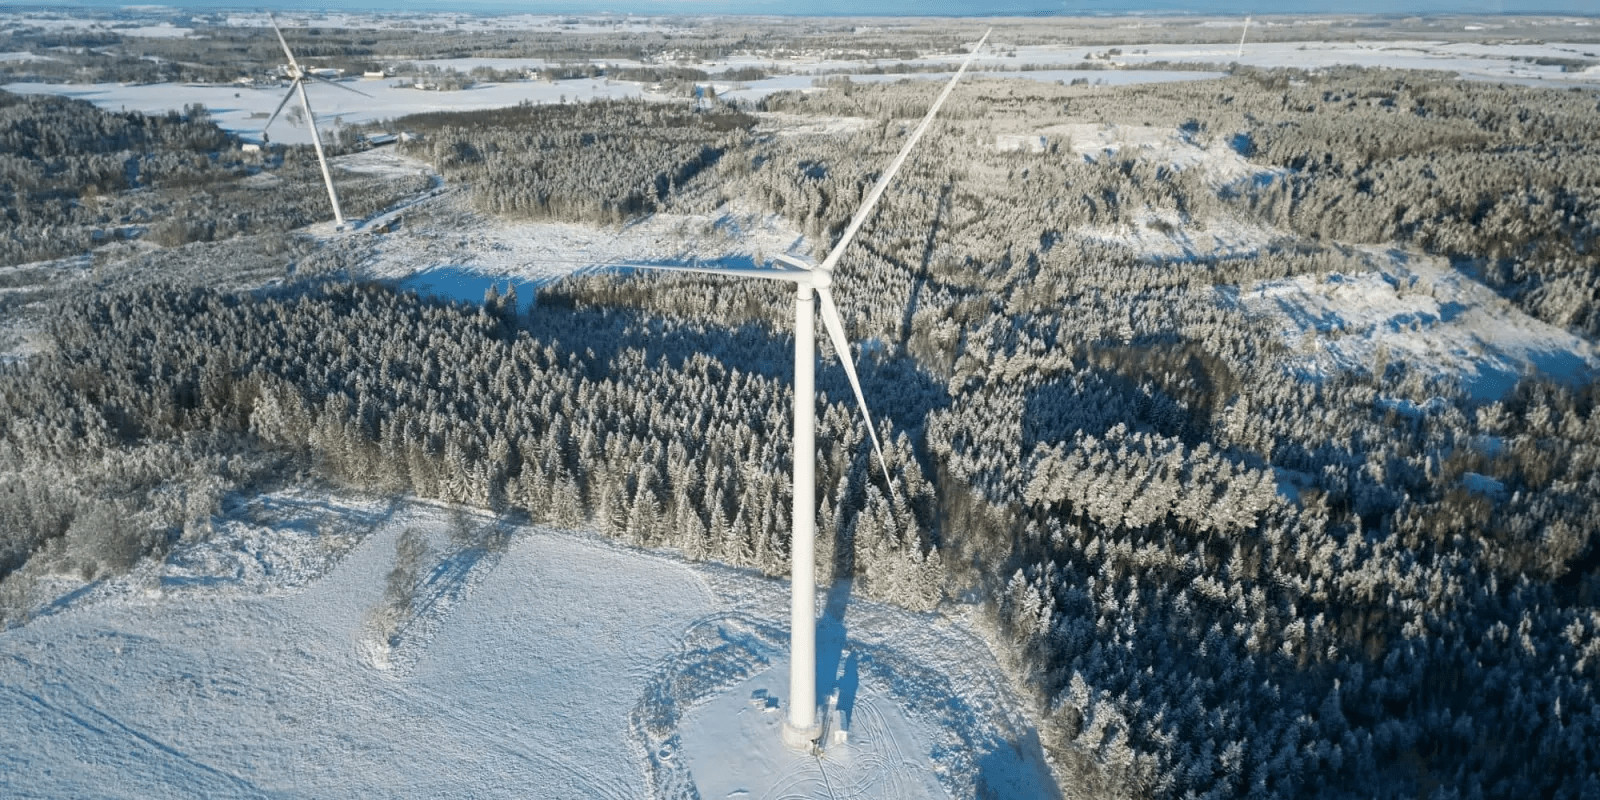 Sweden Just Built The World's Tallest Wooden Wind Turbine